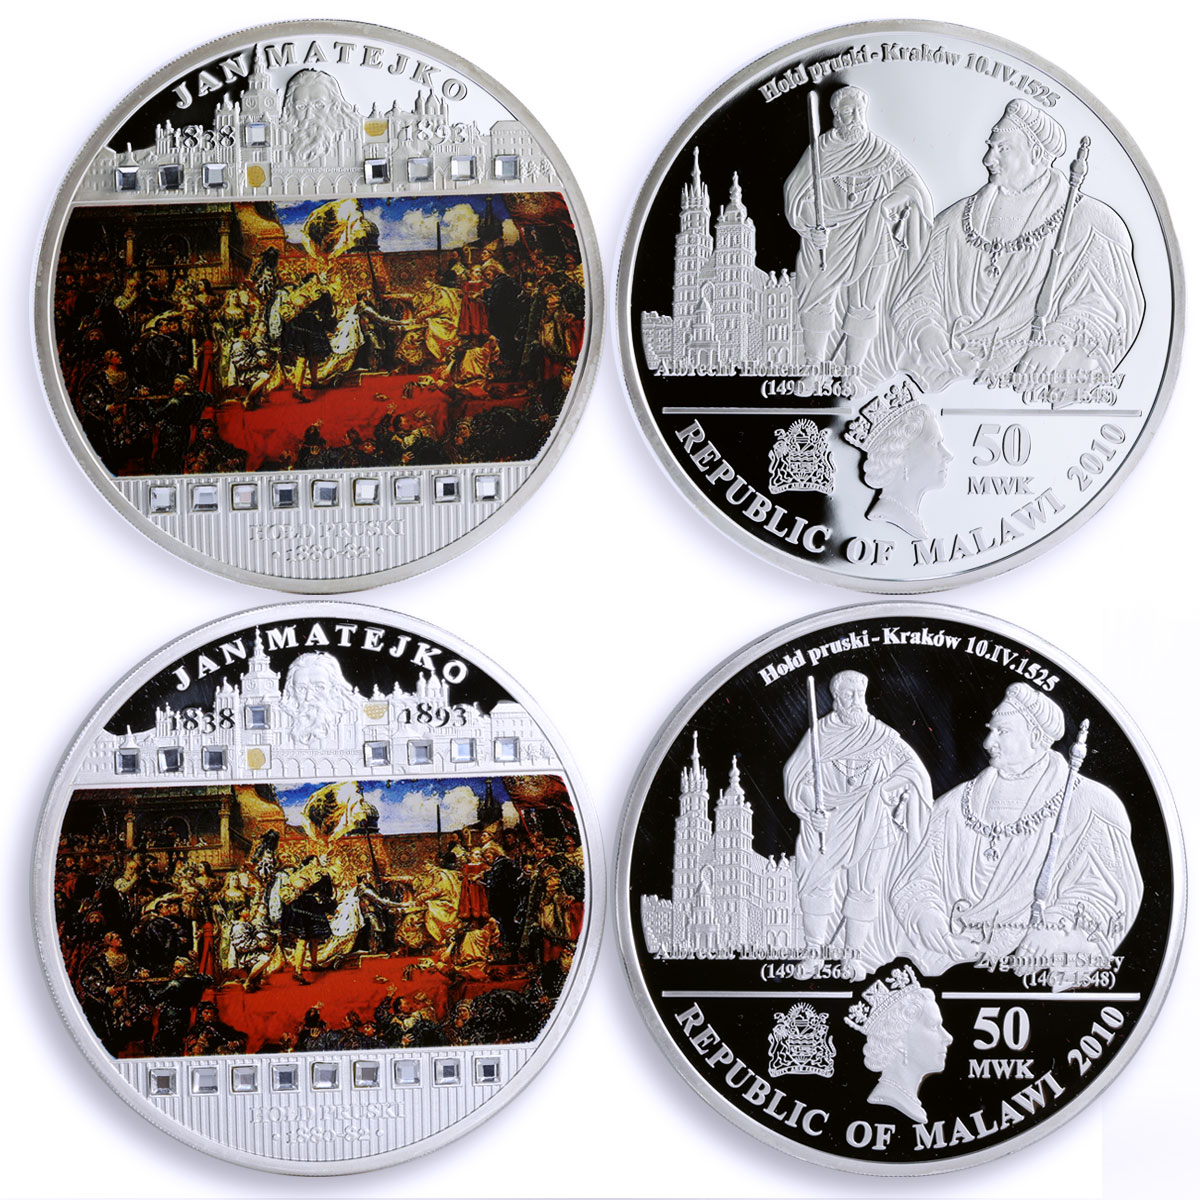 Malawi set of 6 coins Polish Painter Jan Matejko Art colored silver coins 2009